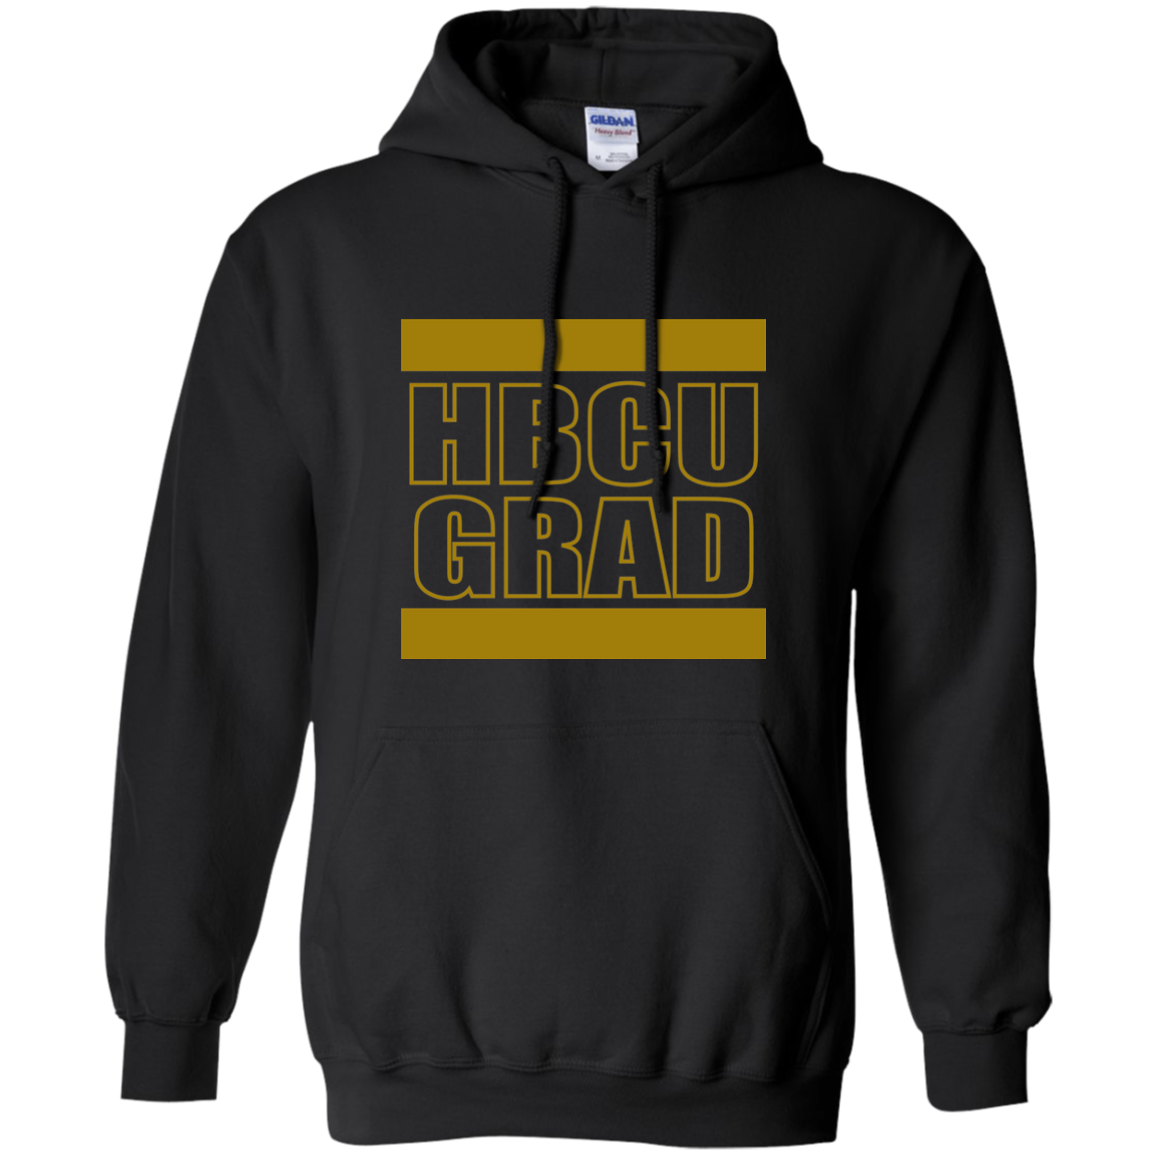 HBCU Grad Pullover Hoodie 8 oz.